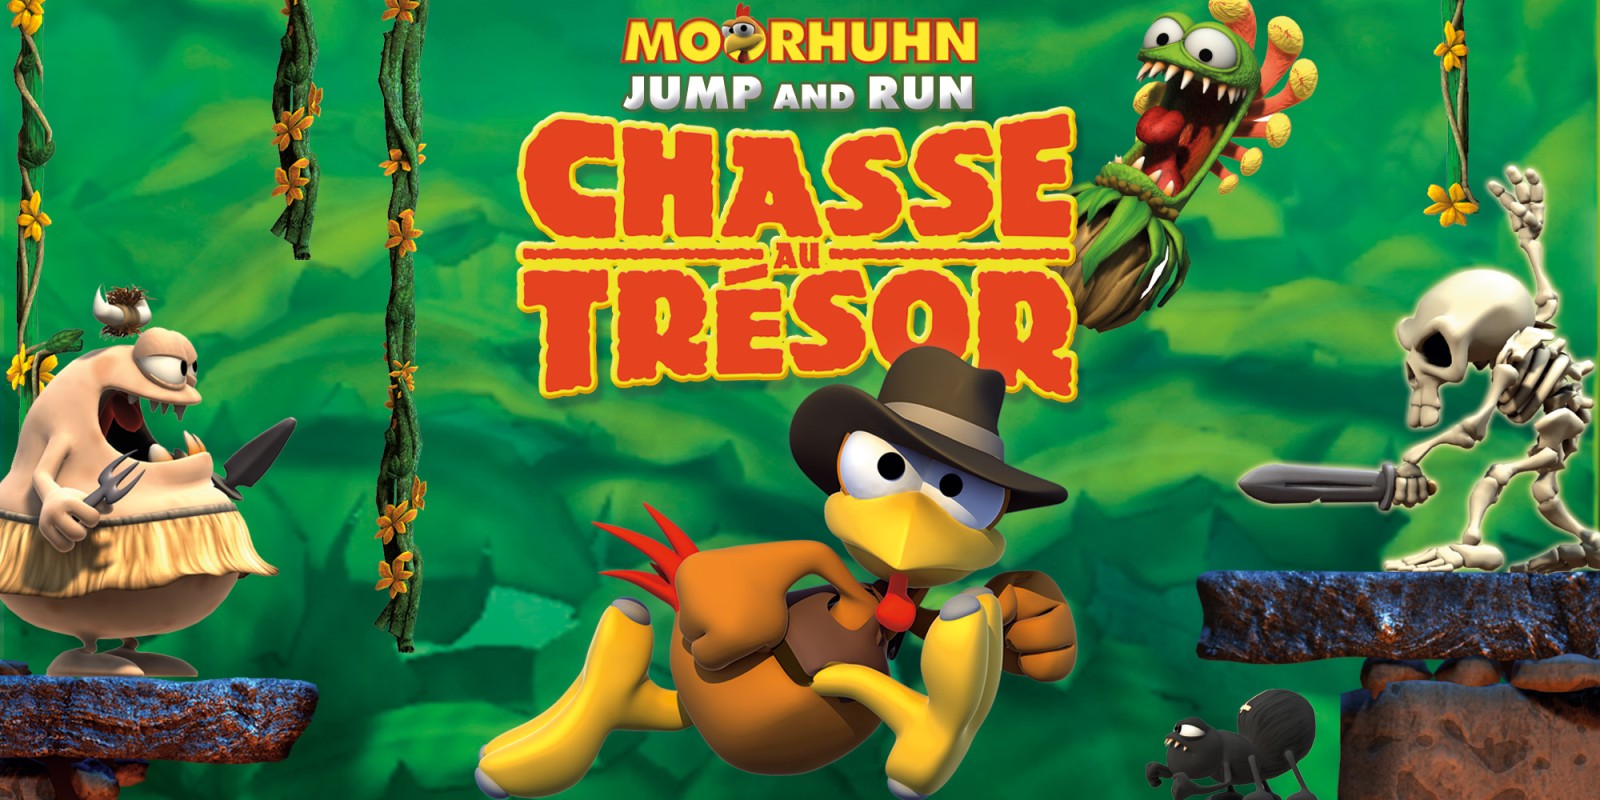 Moorhuhn Jump and Run 'Chasse au trésor'